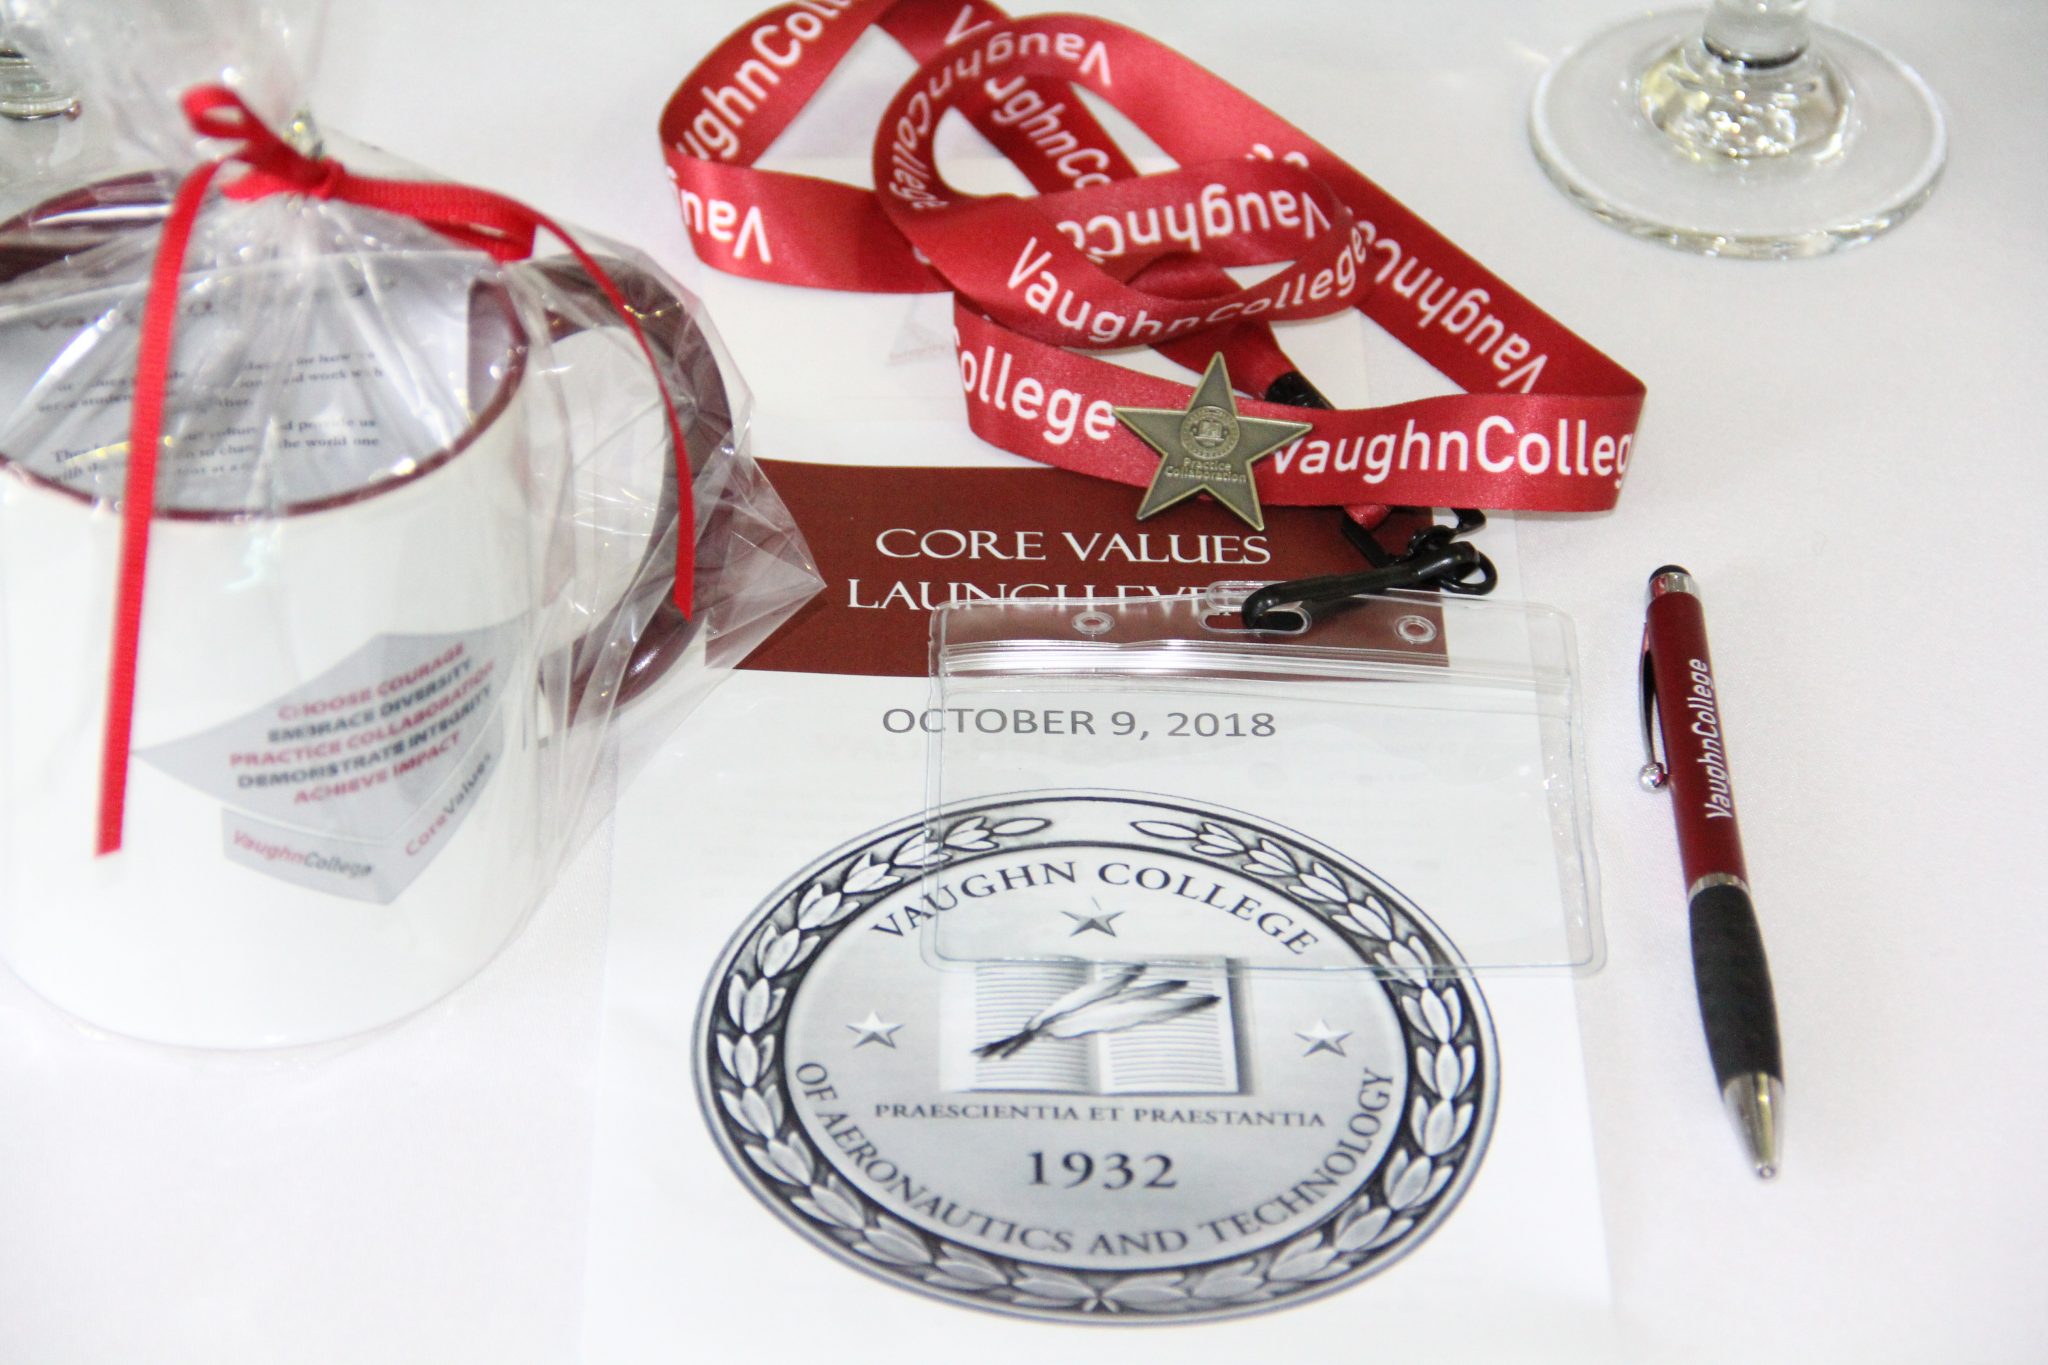 Vaughn College Launches Core Values Initiation